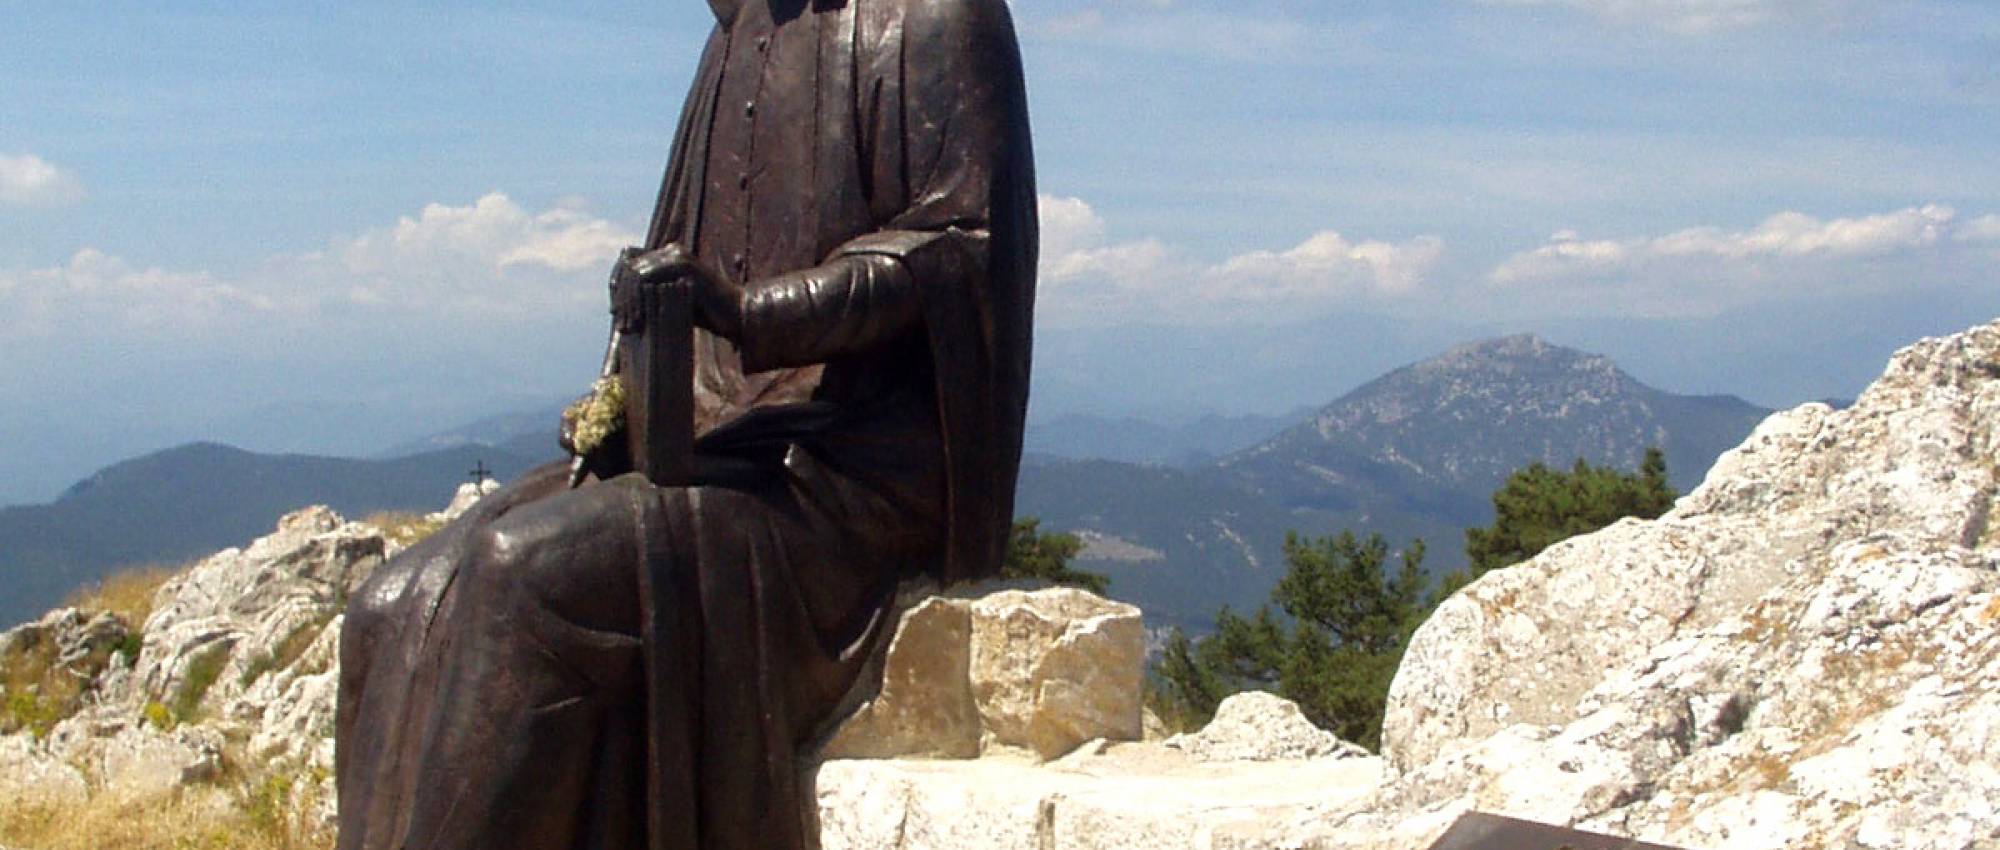 Monument dedicated to Jacint Verdaguer at Mare de Déu del Mont. CC BY-SA 3.0 - DavidianSkitzou / Wikimedia Commons